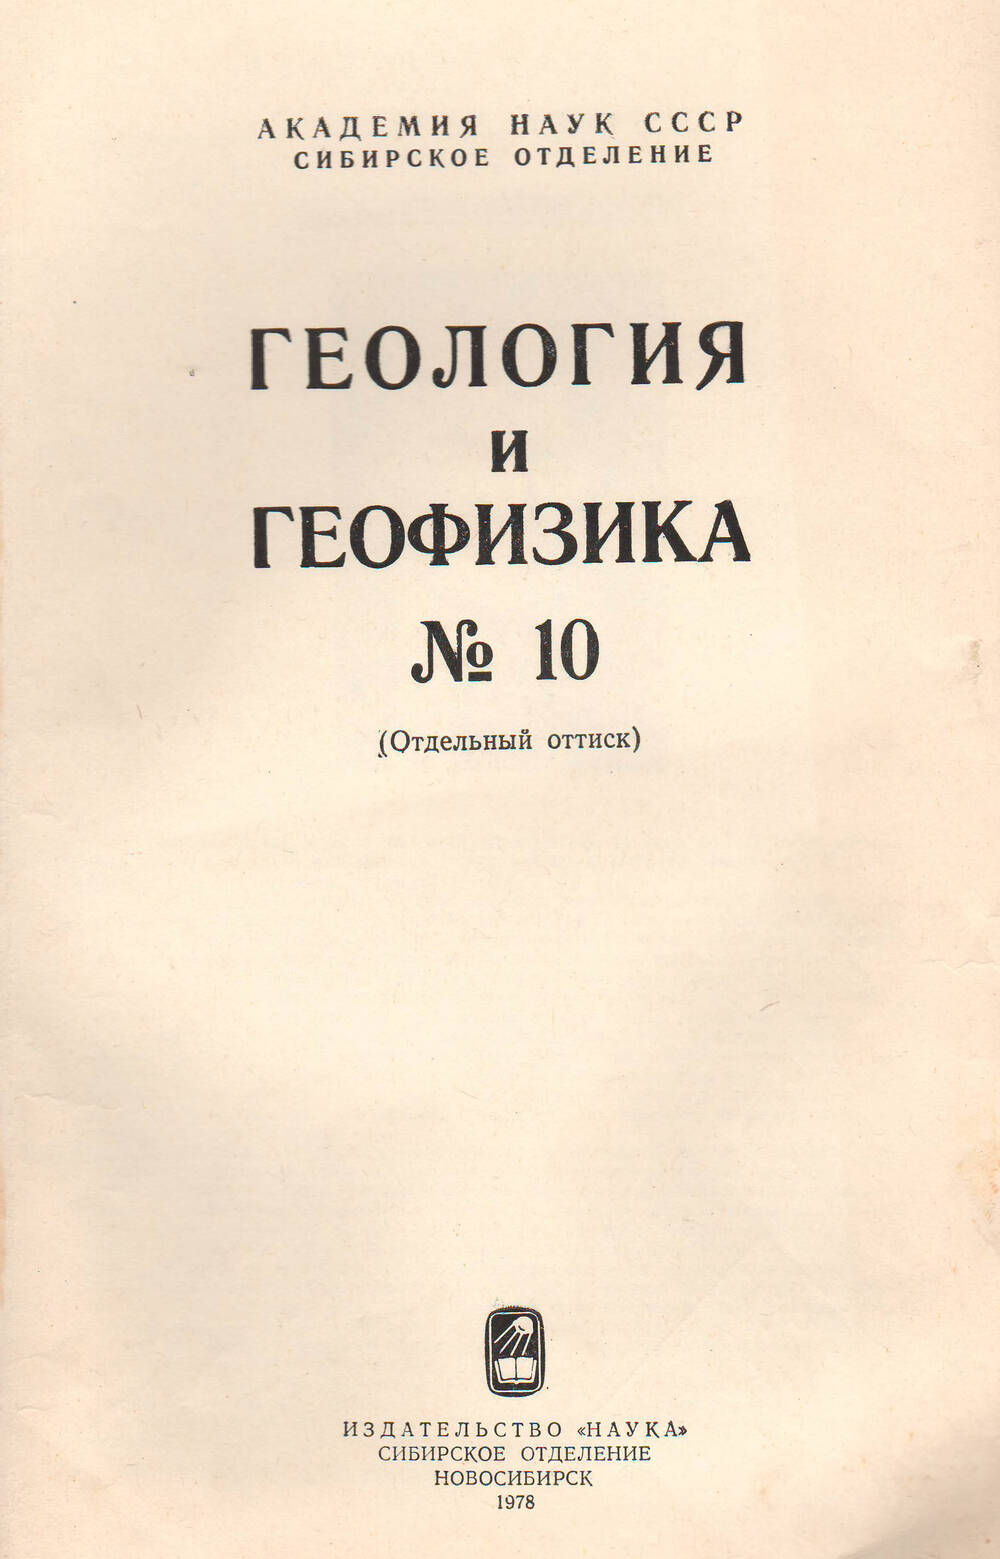 АН СССР. Брошюра Геология и геофизика №10, 1978 года.